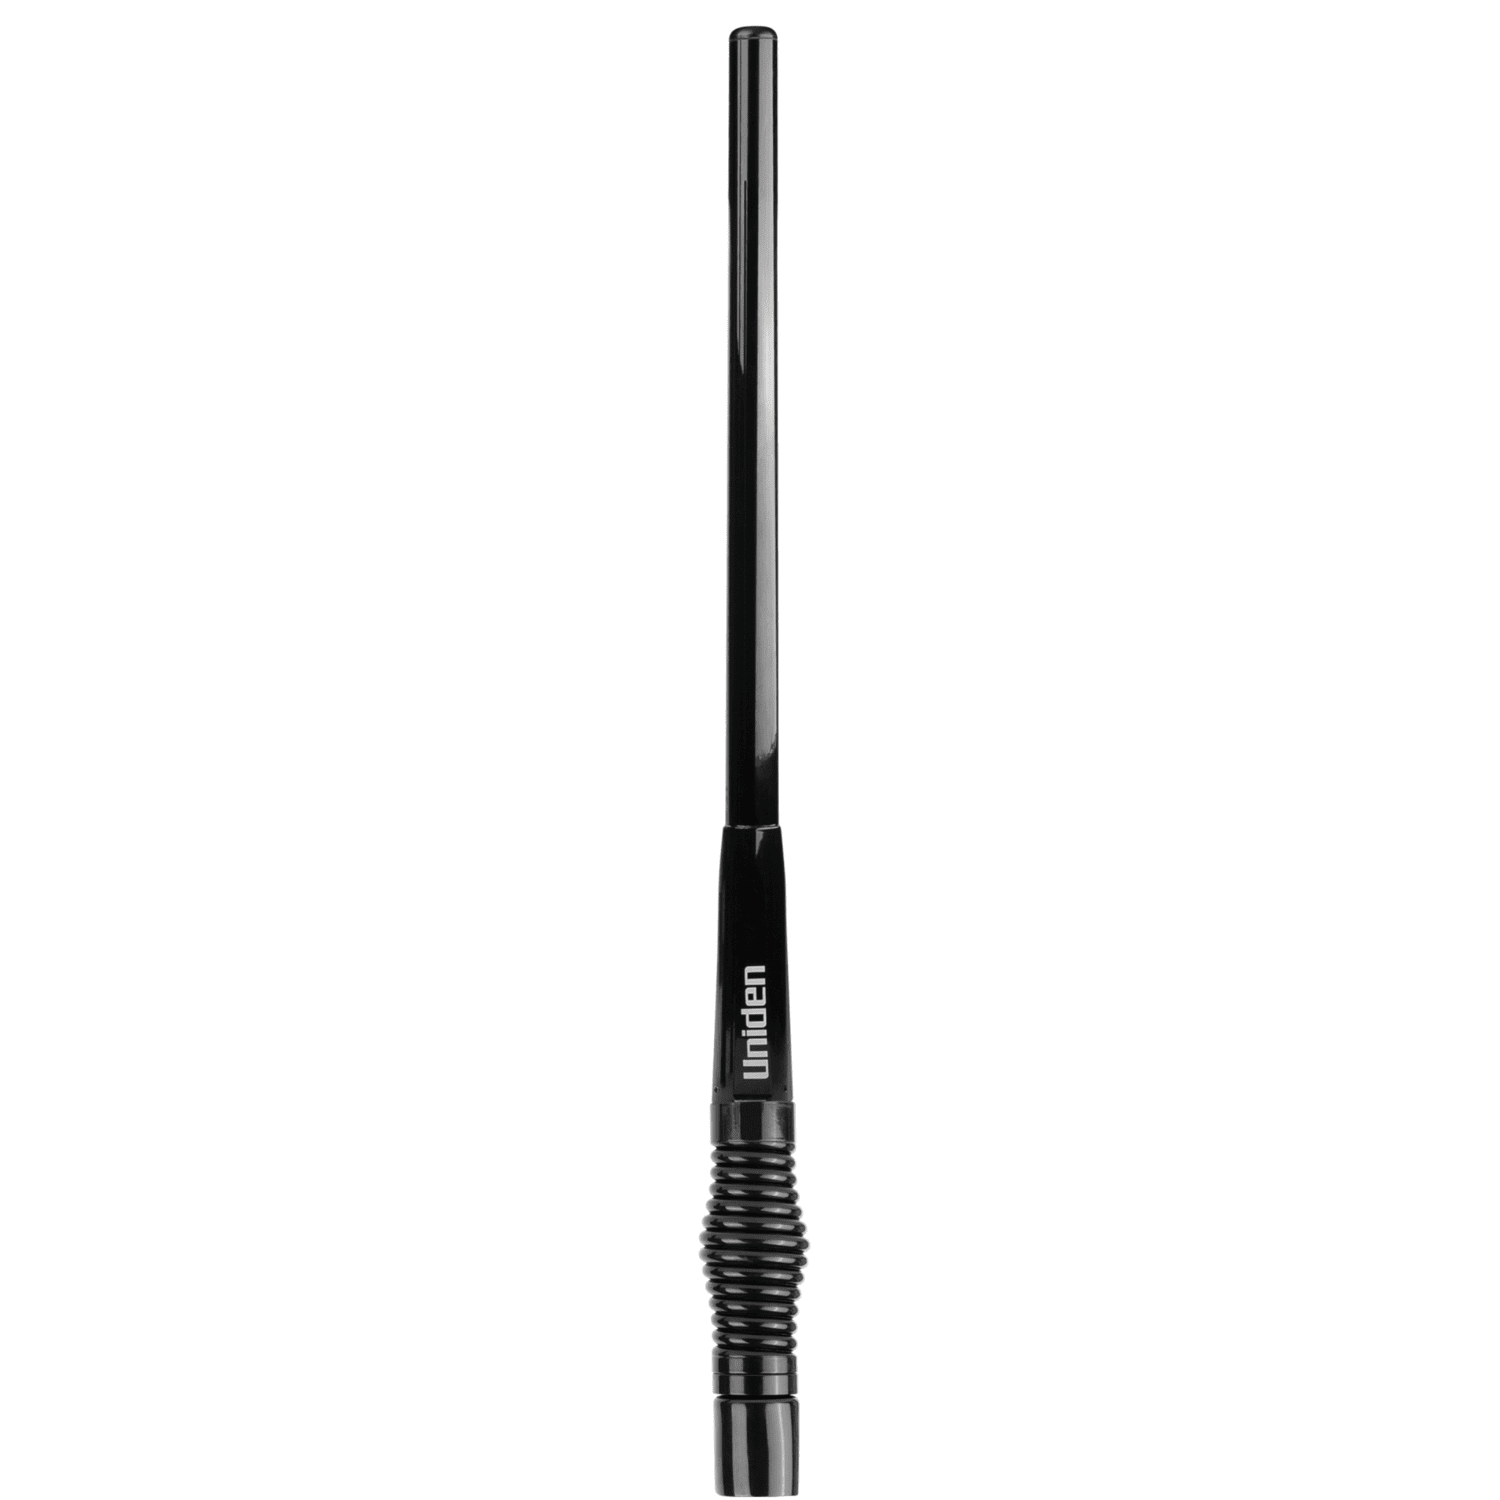 Antenna BLACK - 3.0 dBi 725mm